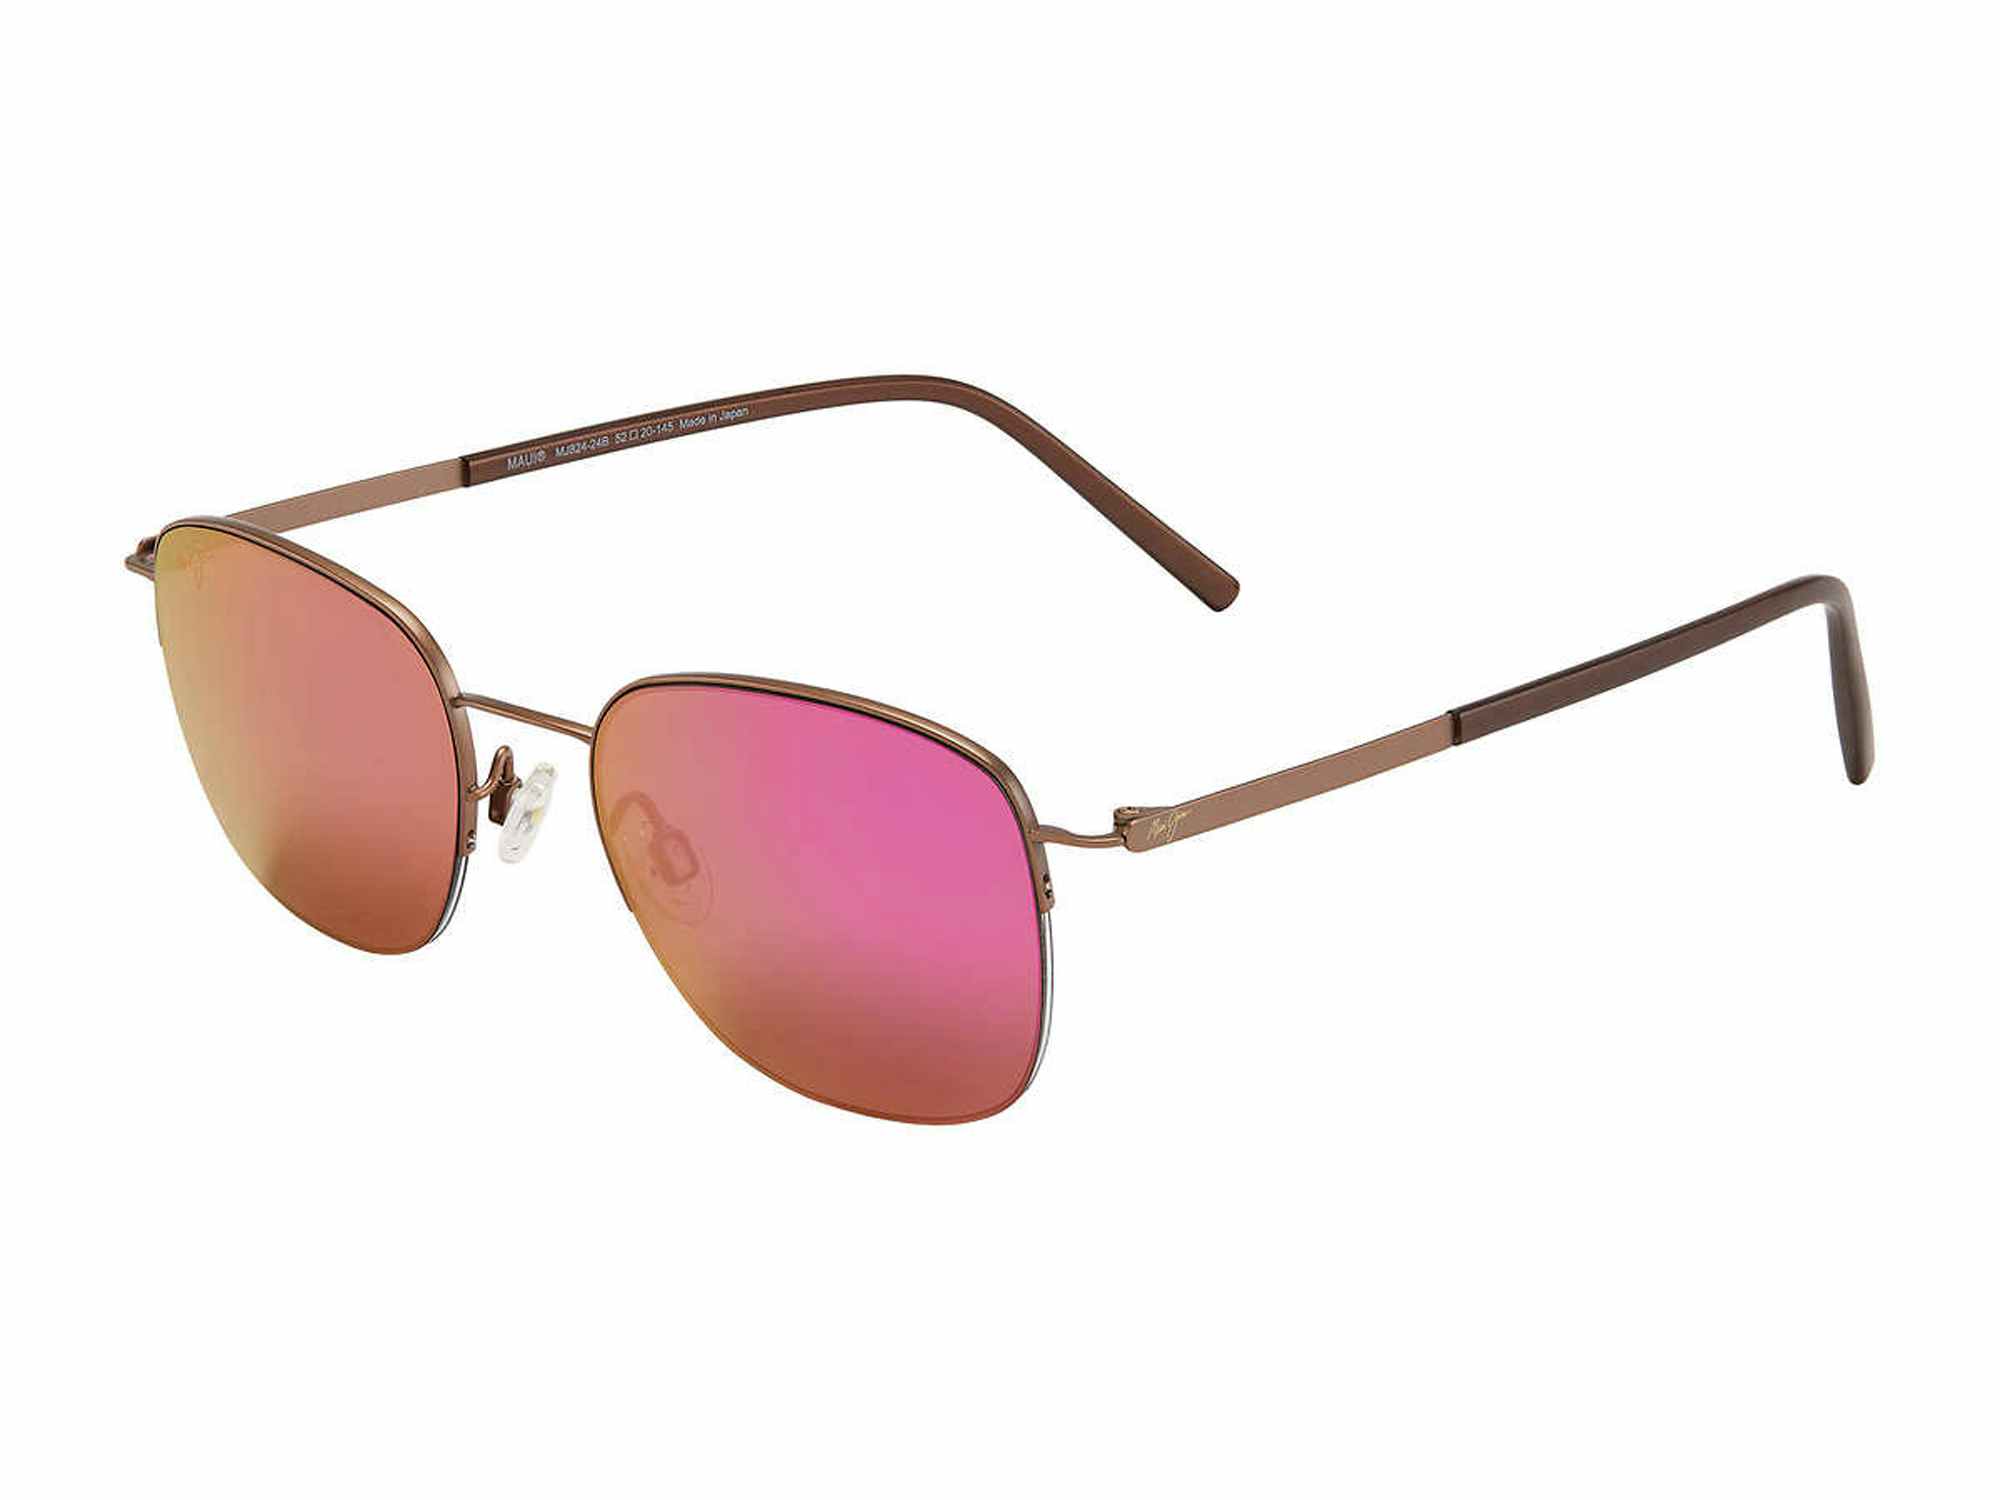 maui jim sunglasses from costco